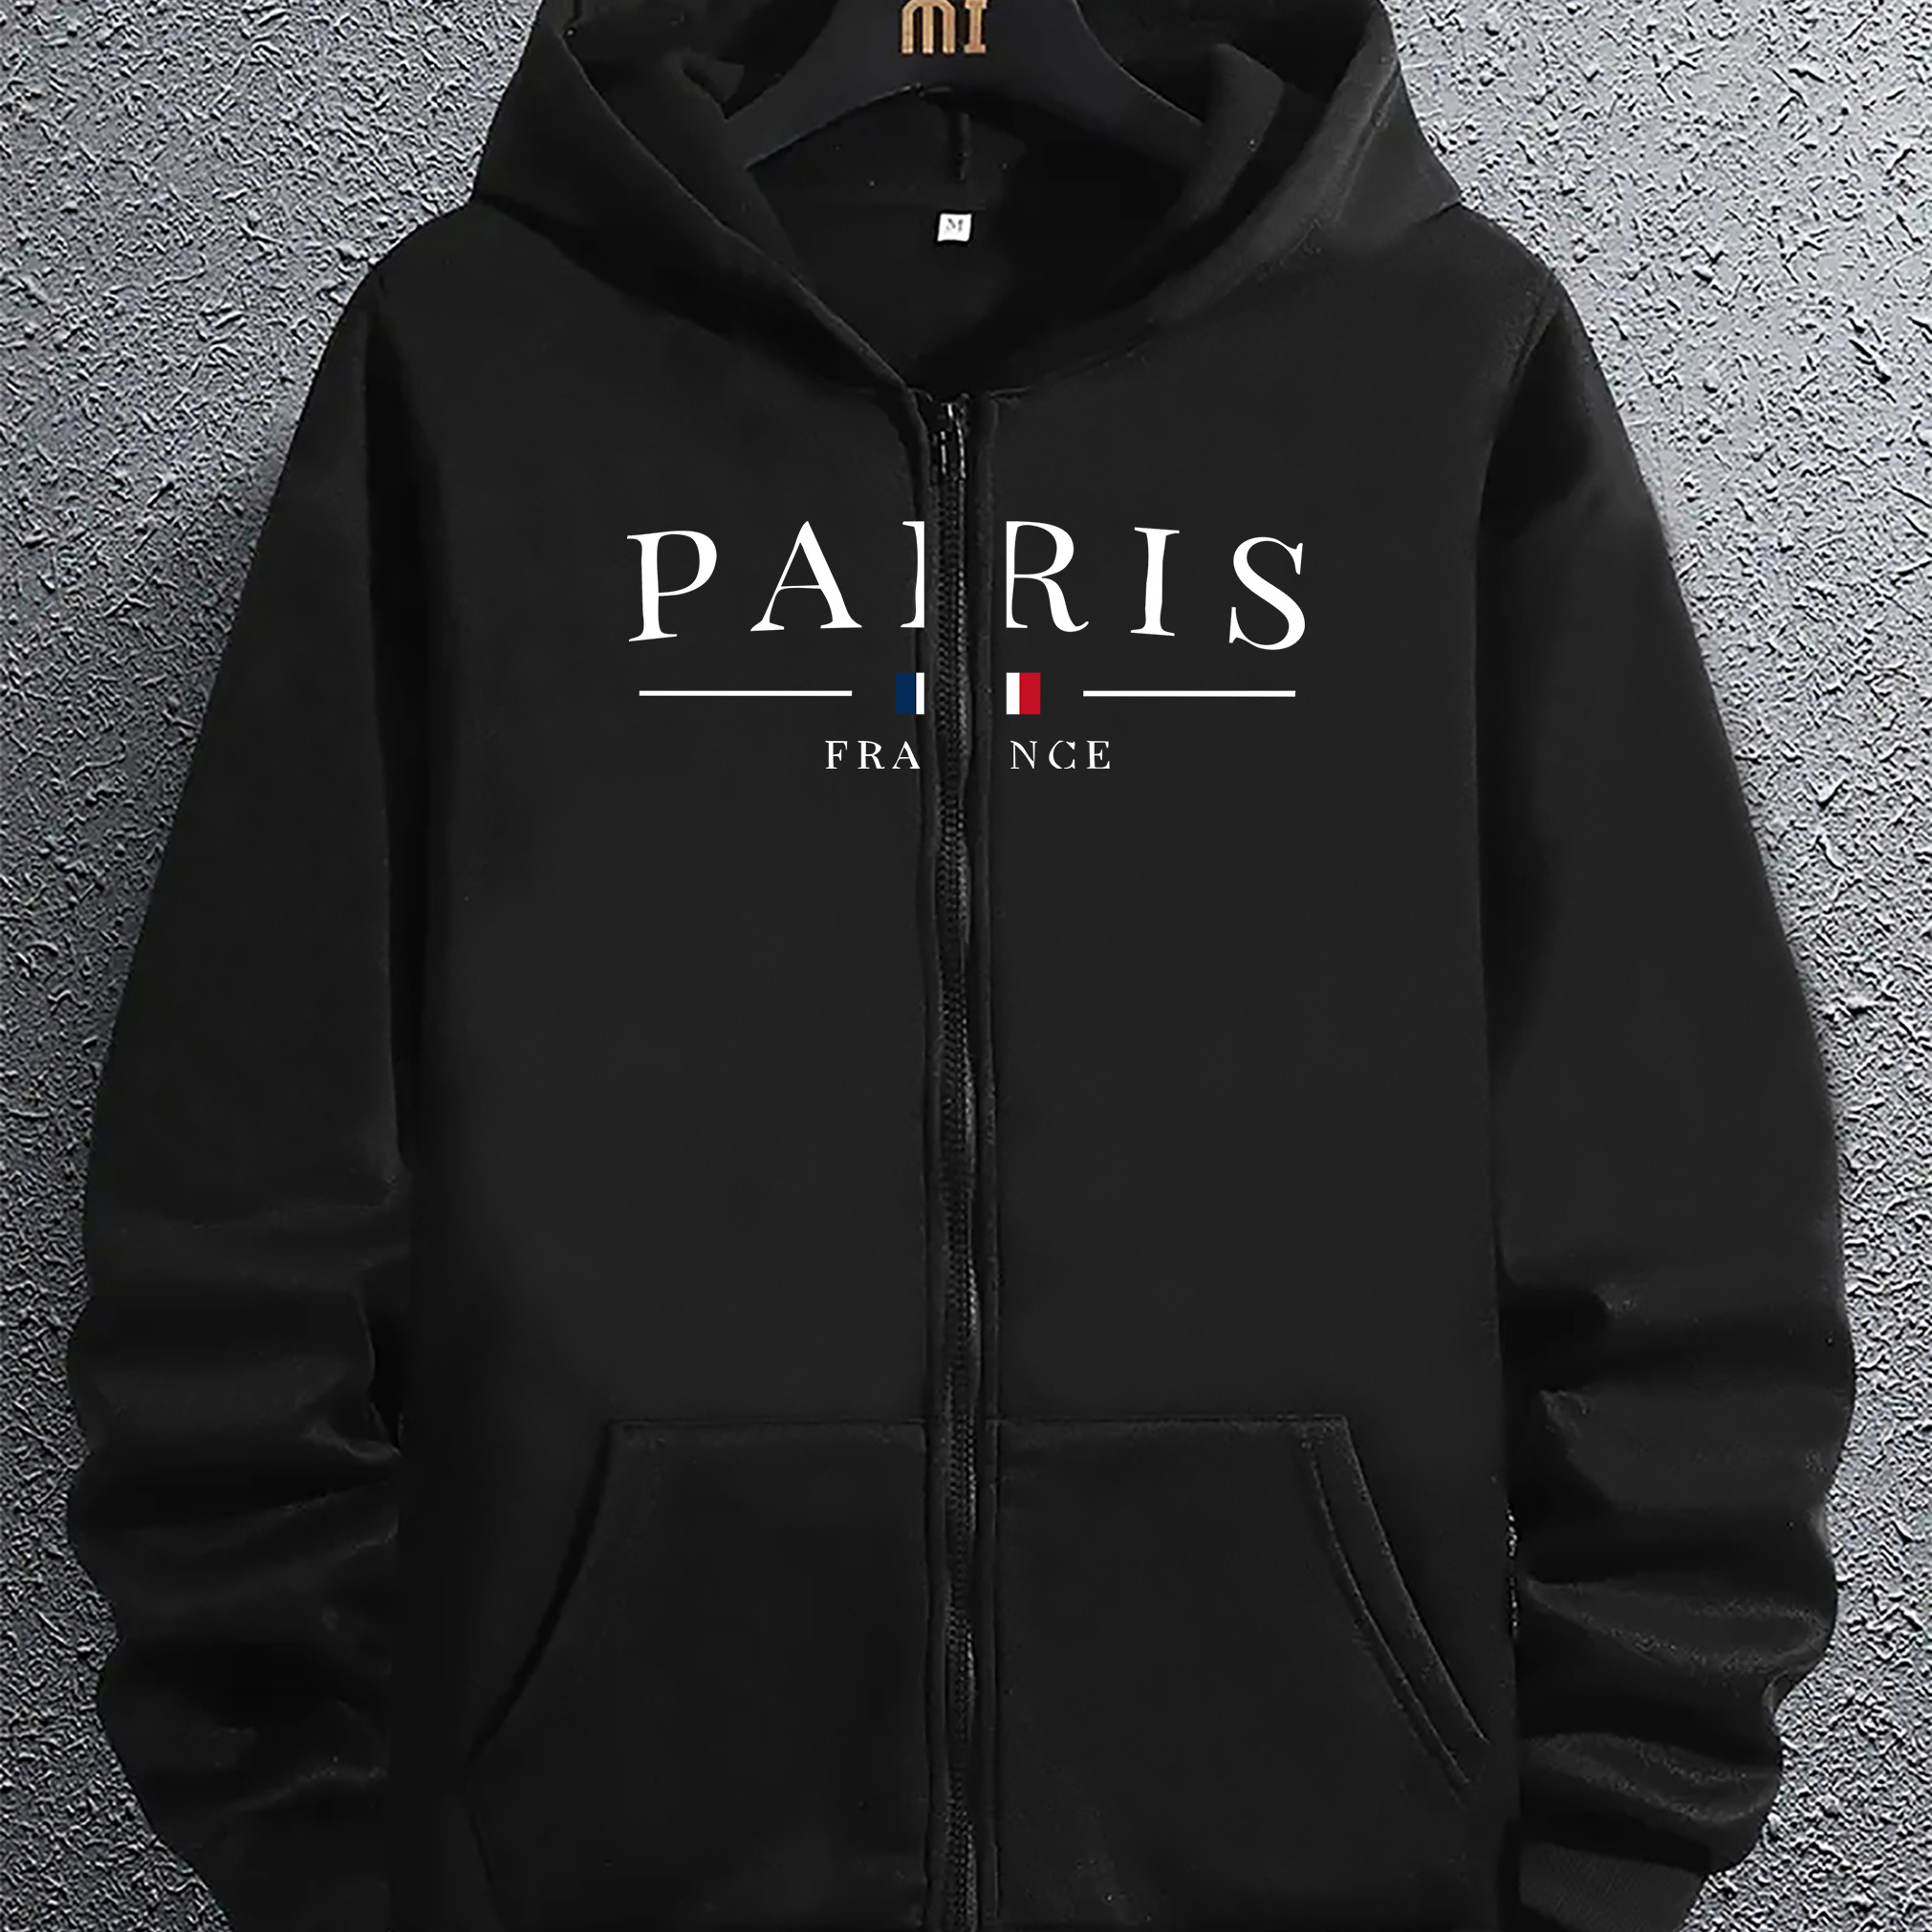 

Paris France Letter Print Men's Long Sleeve Hoodie, Zip-up Hooded Sweatshirt With Kangaroo Pocket, Casual Comfortable Versatile Top For Autumn & Winter